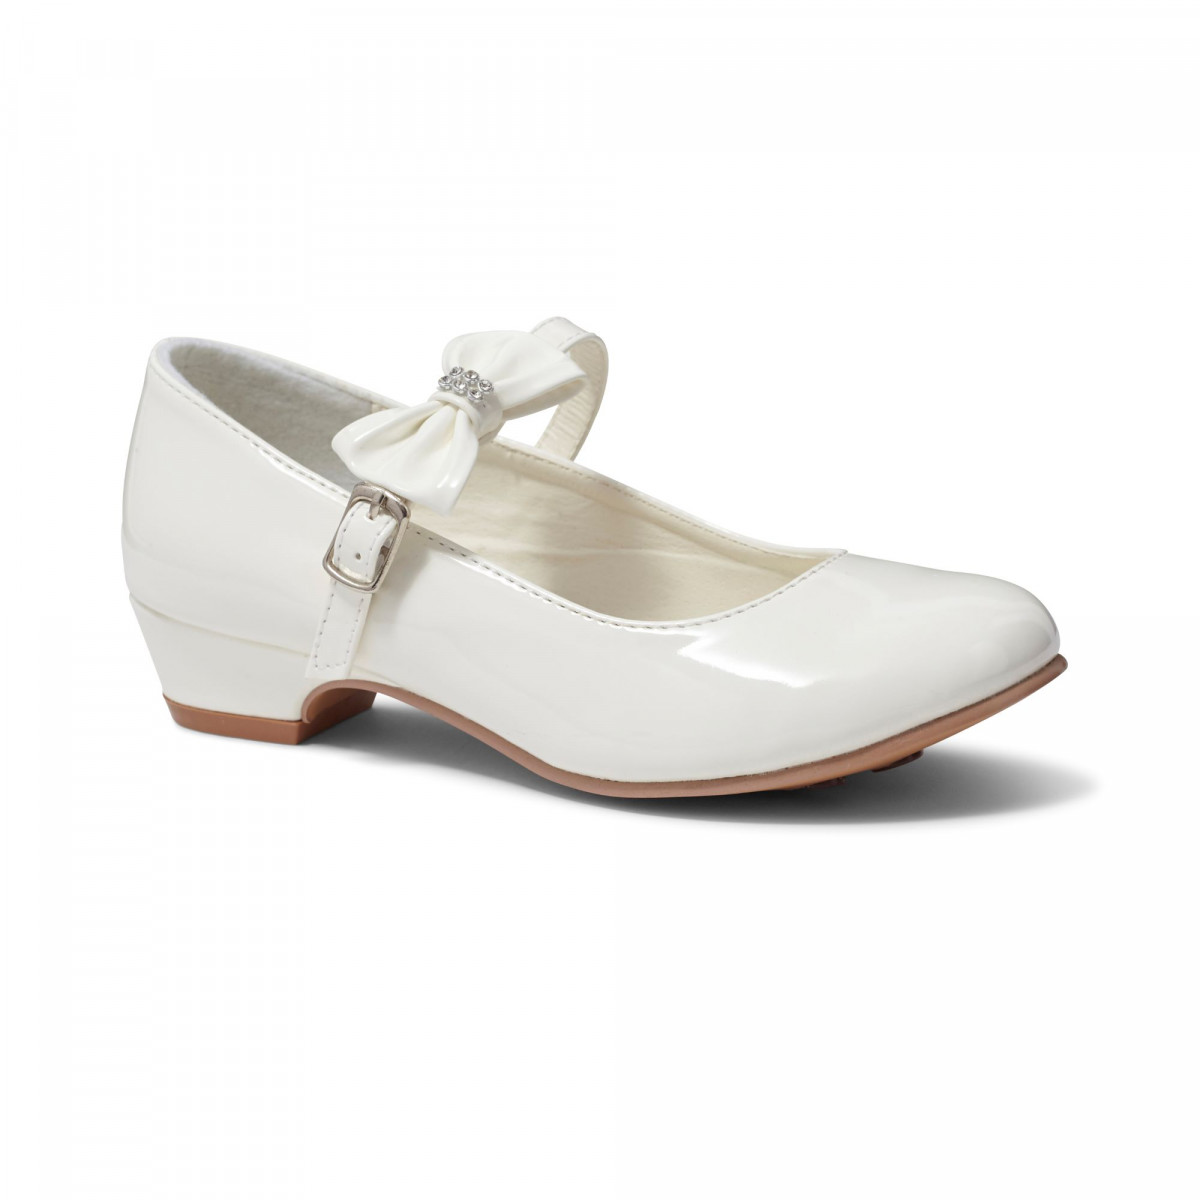 Girls patent shoe by Sevva – White or Ivory | Wonderland